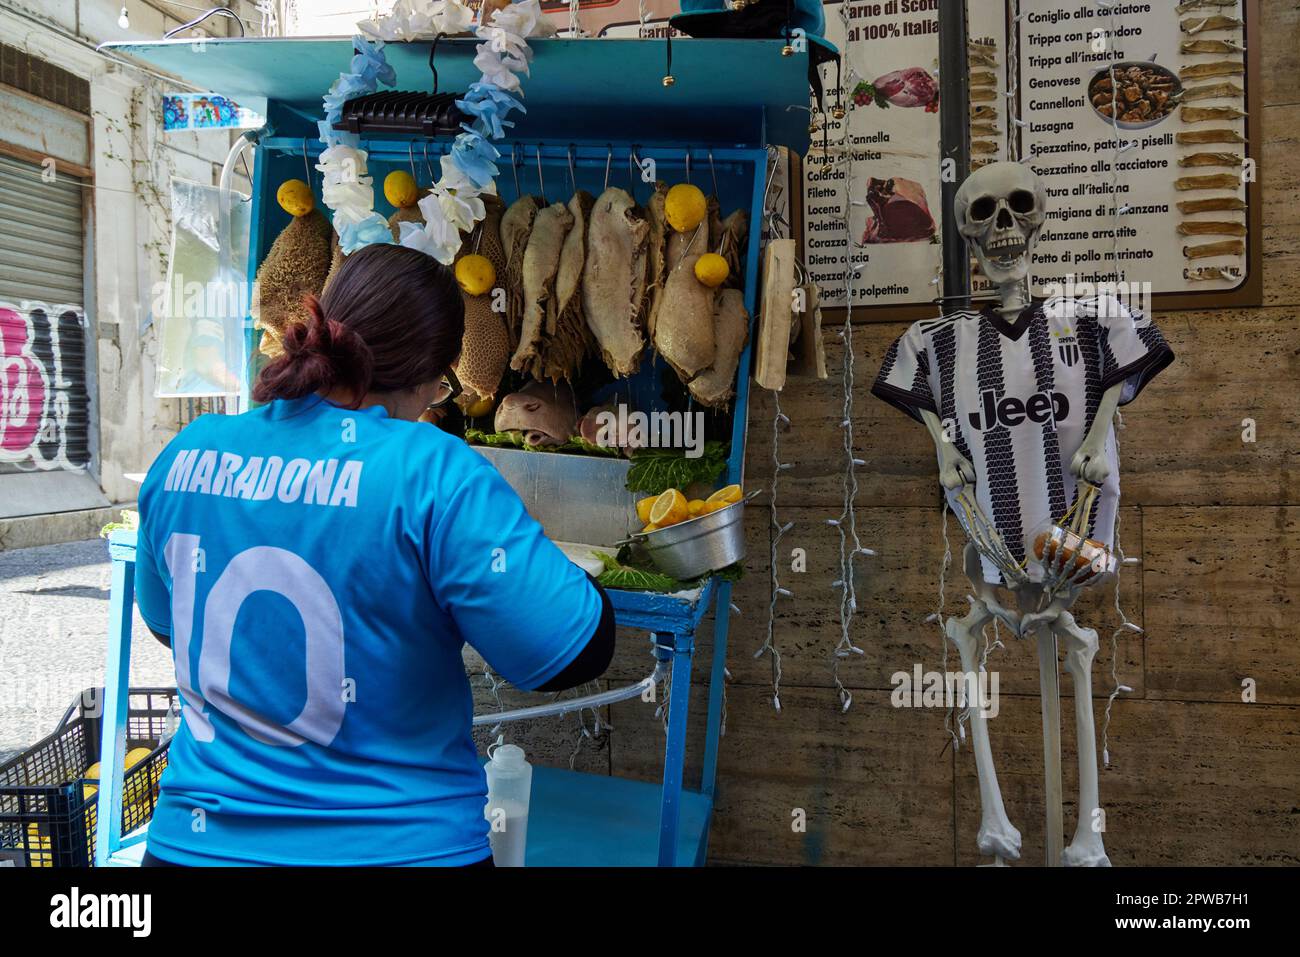 Juventus t shirt hi-res stock photography and images - Alamy